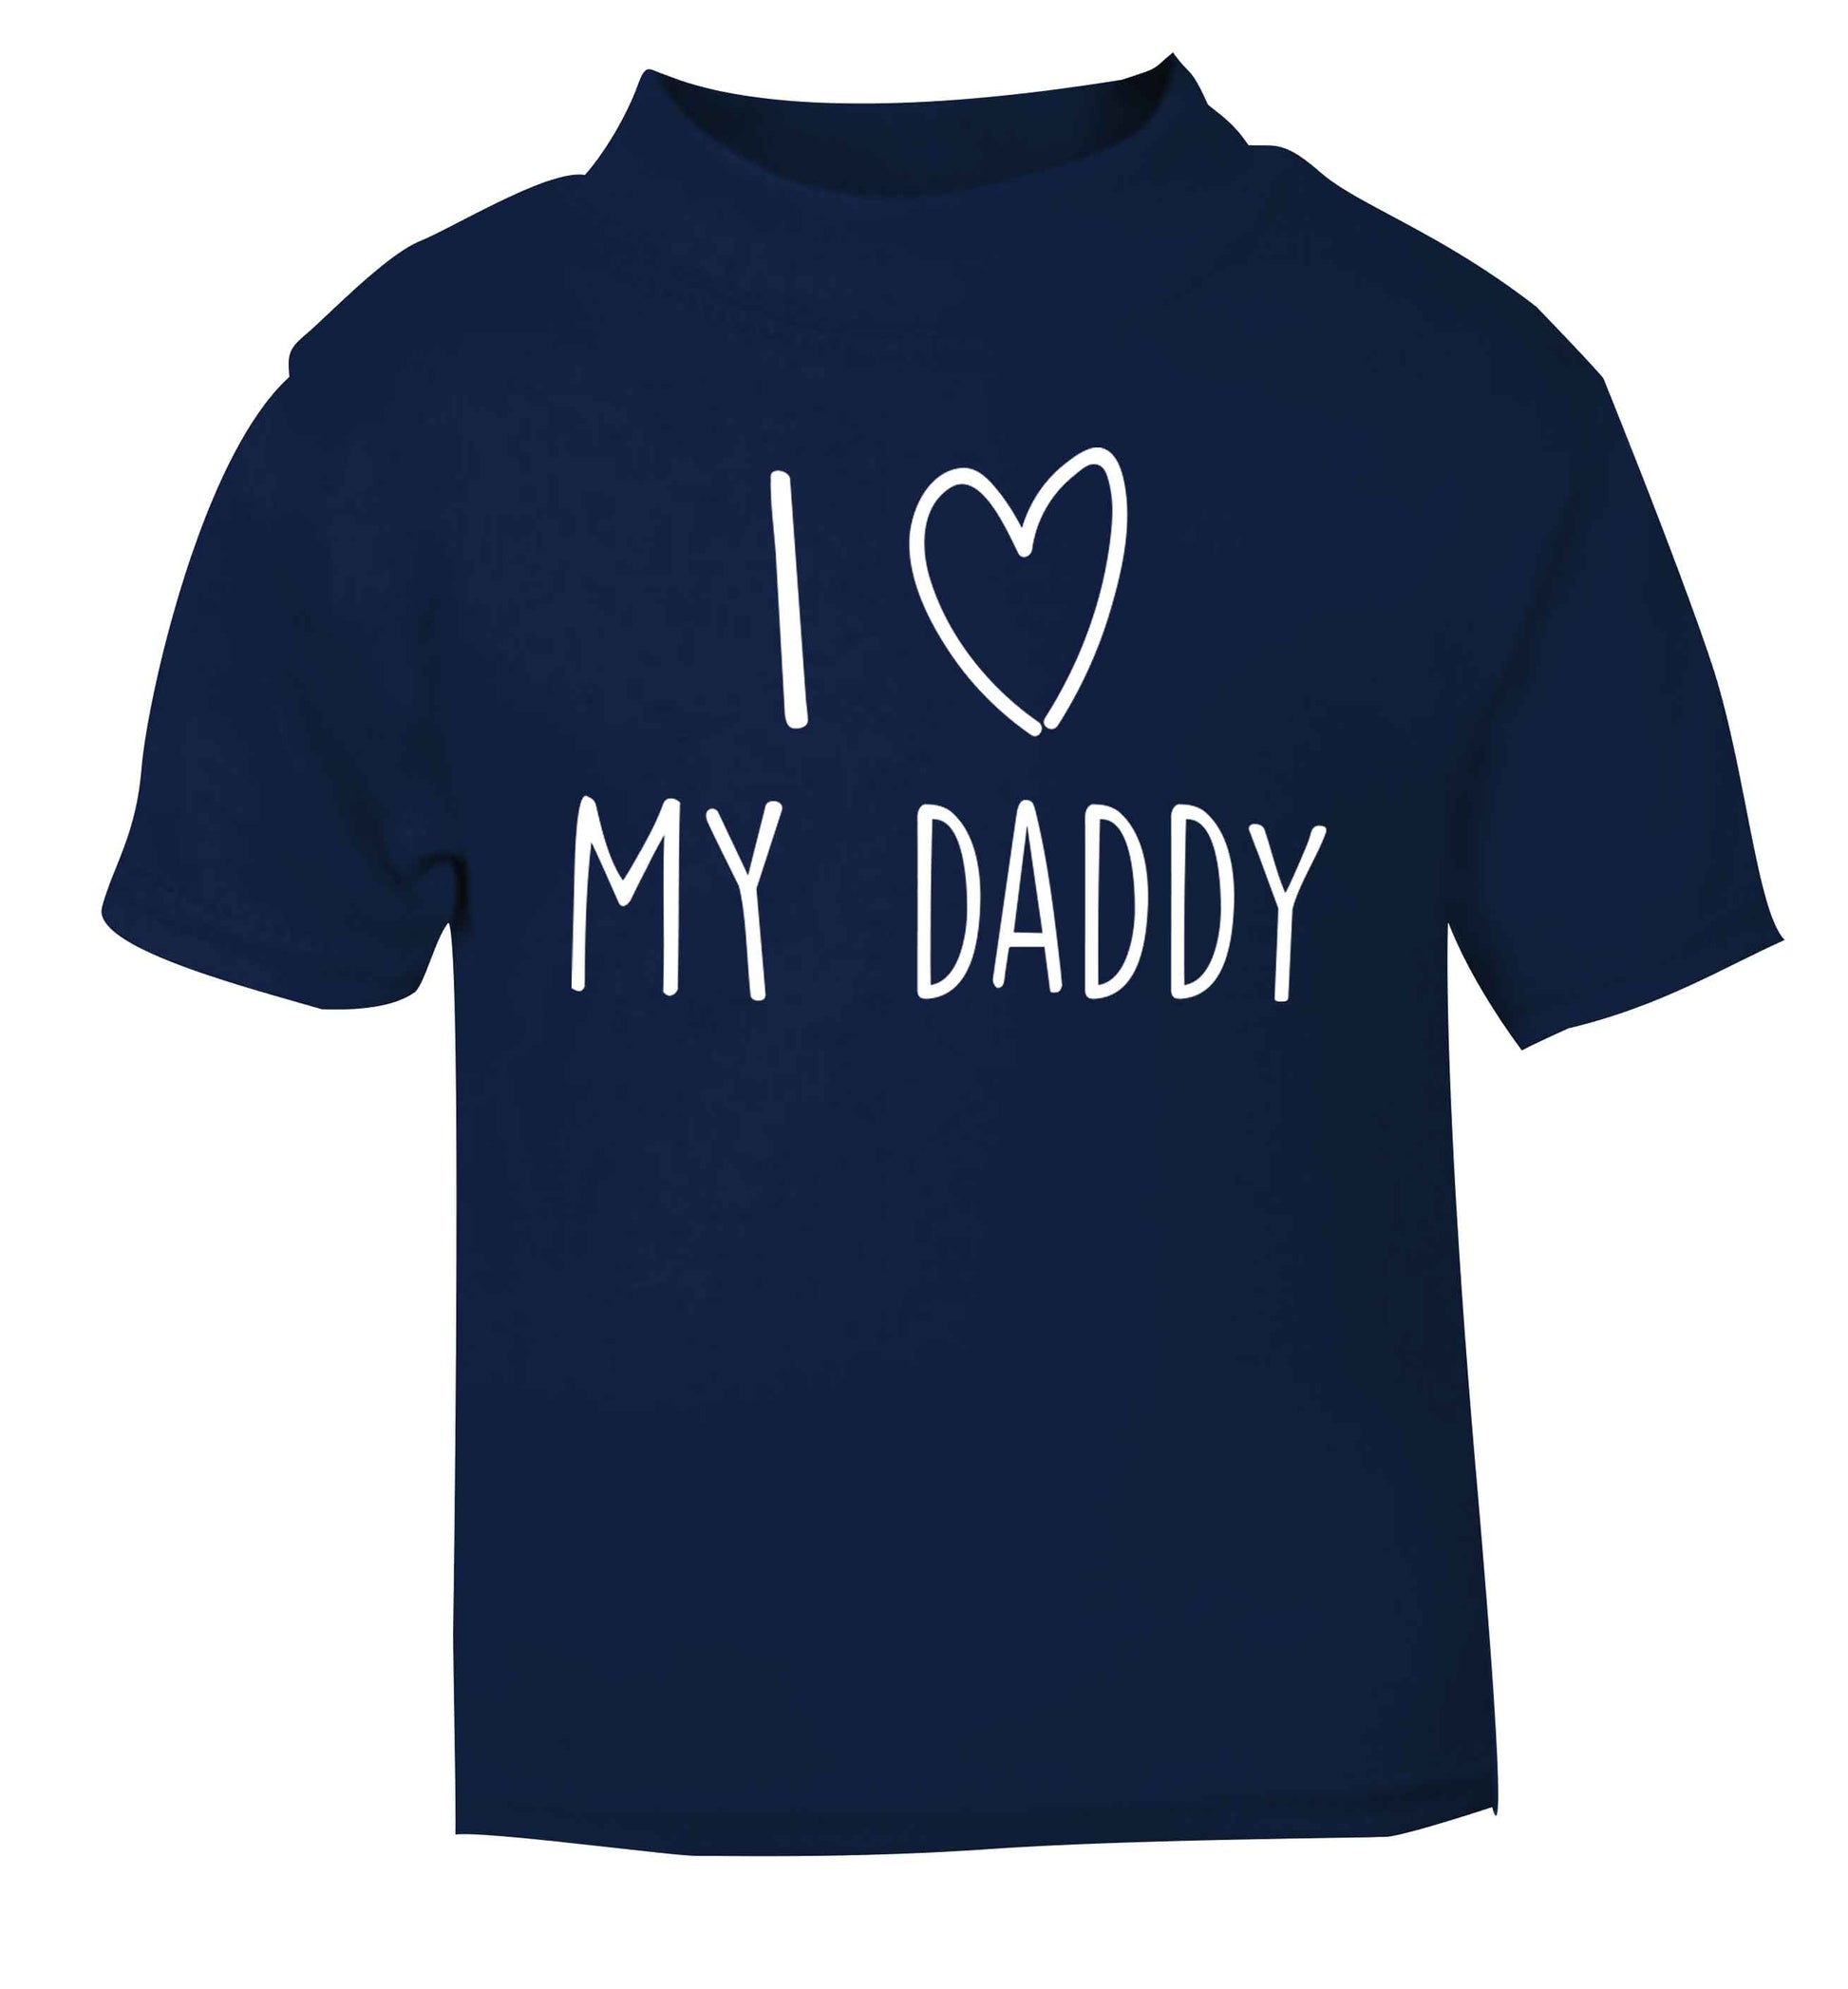 I love my daddy navy baby toddler Tshirt 2 Years